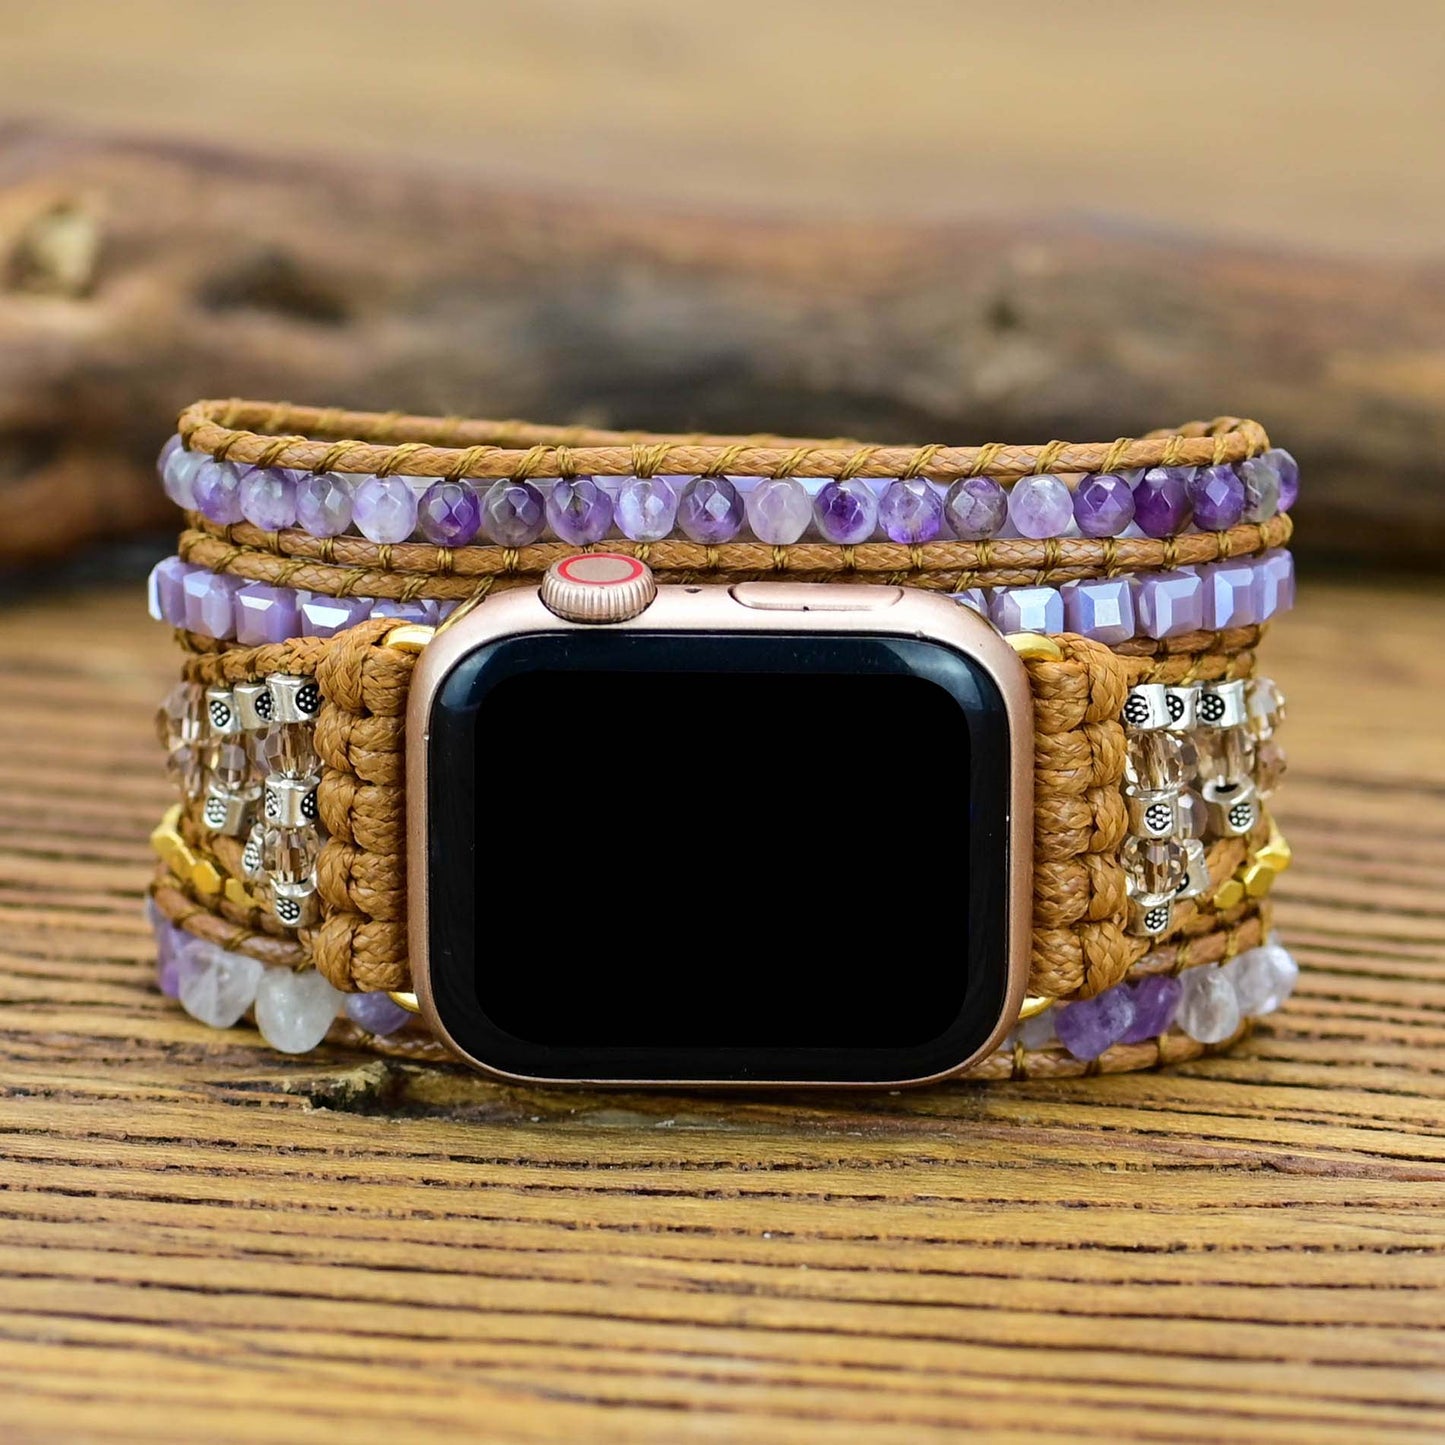 Handmade Amethyst and Alloy Beads Apple Watch Bracelet